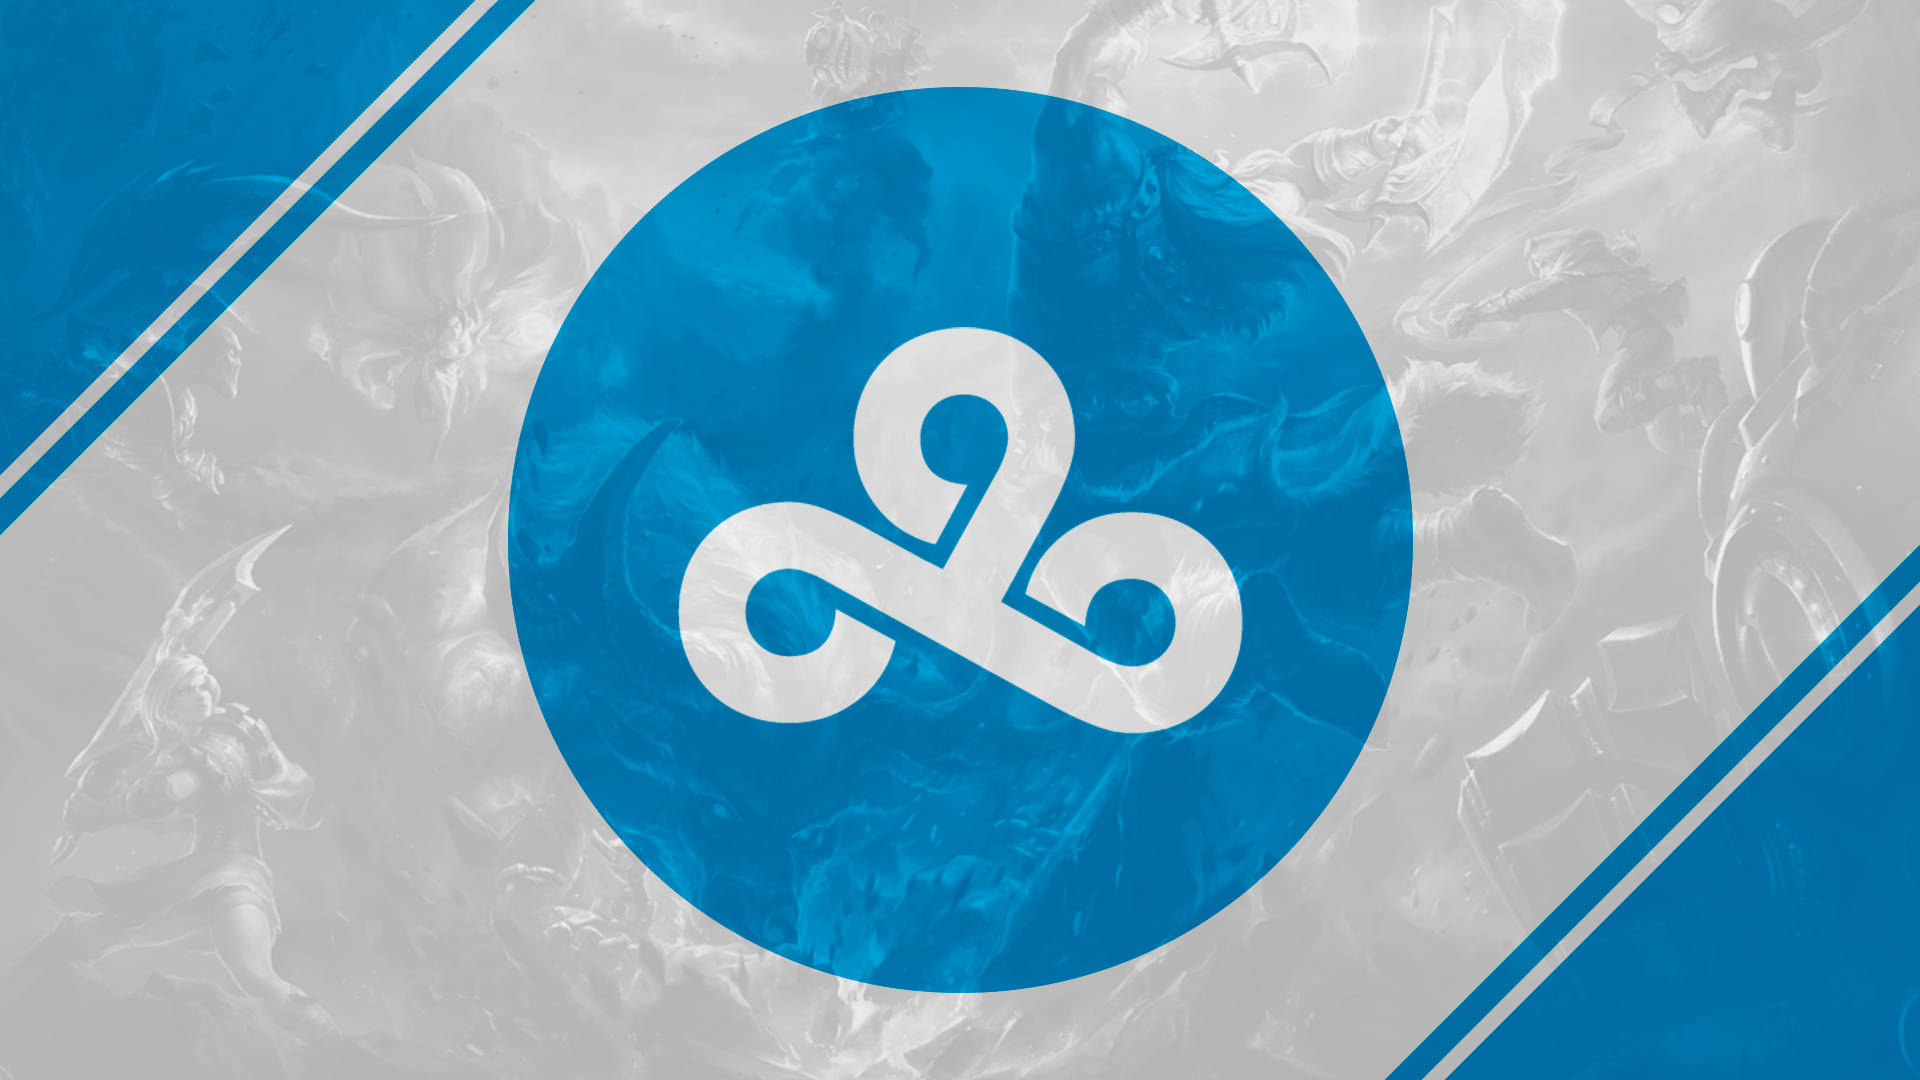 Cloud9 Logo In Translucent Blue Sphere Wallpaper